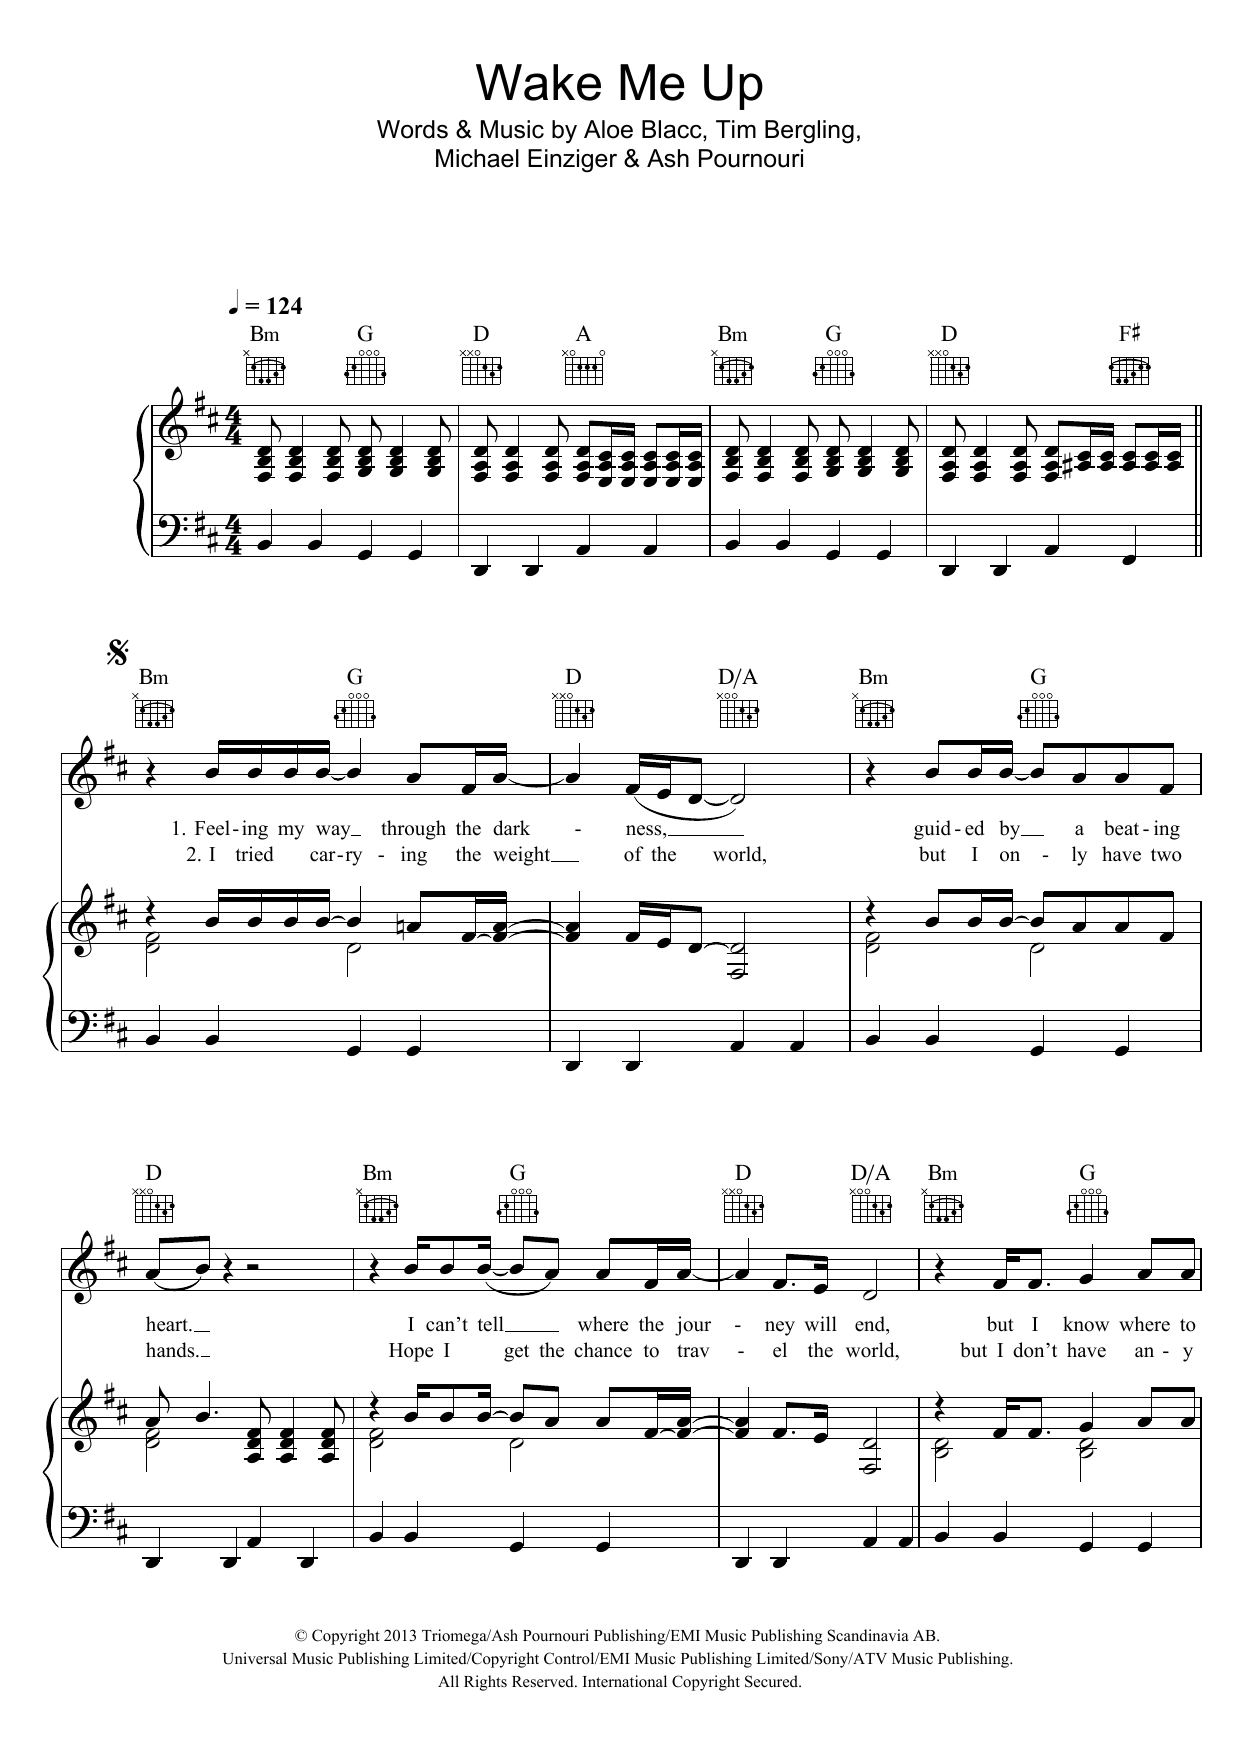 Avicii Wake Me Up Sheet Music Notes & Chords for Lyrics & Chords - Download or Print PDF